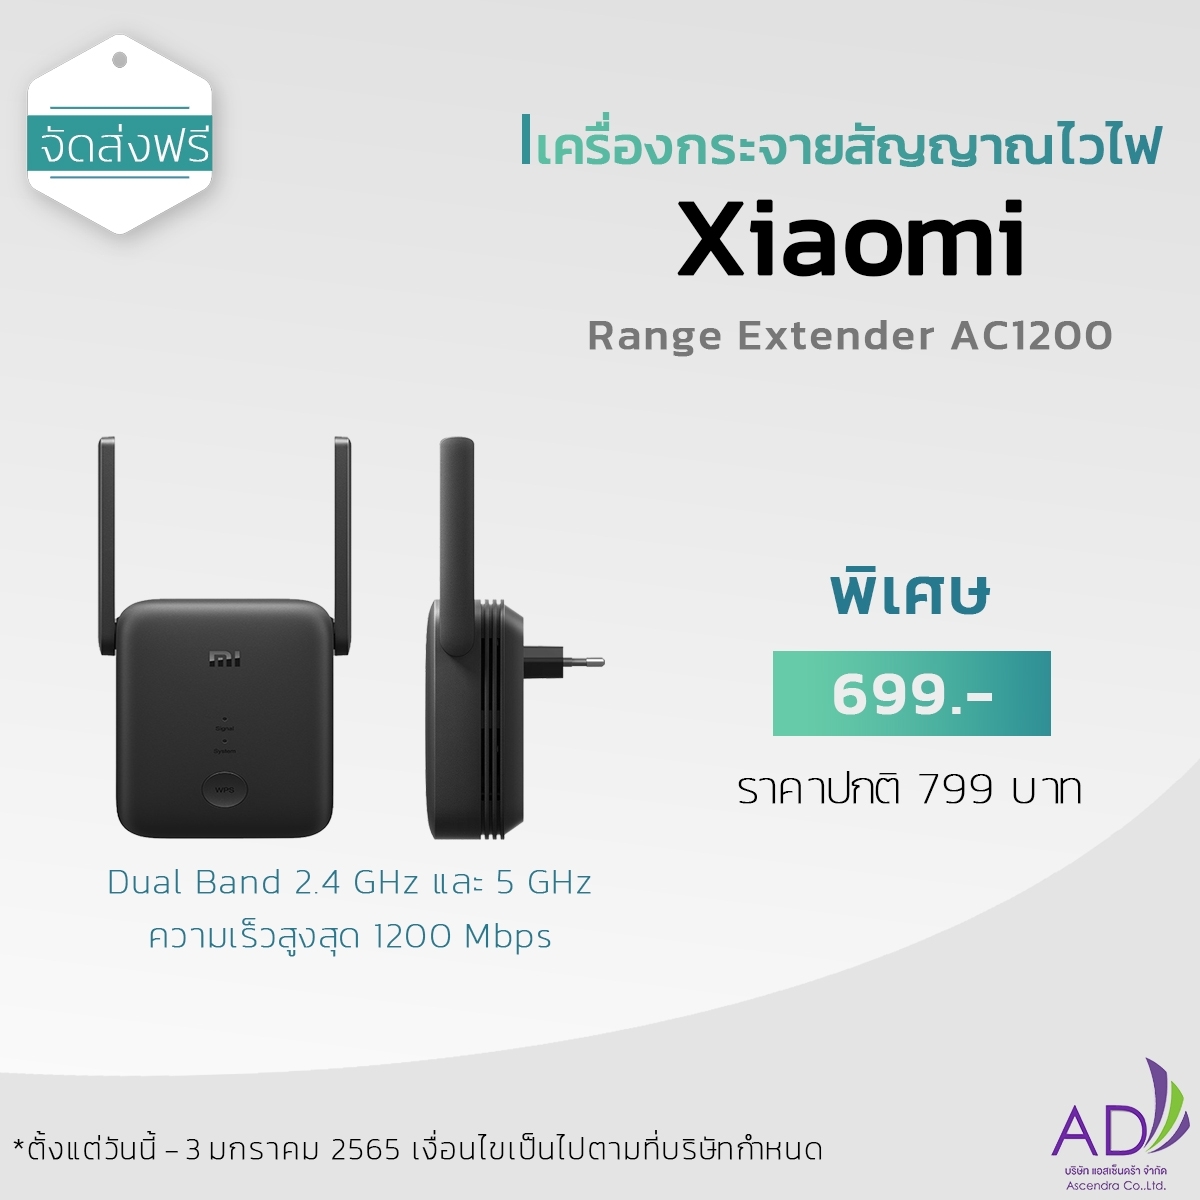 Mi wifi range extender AC1200